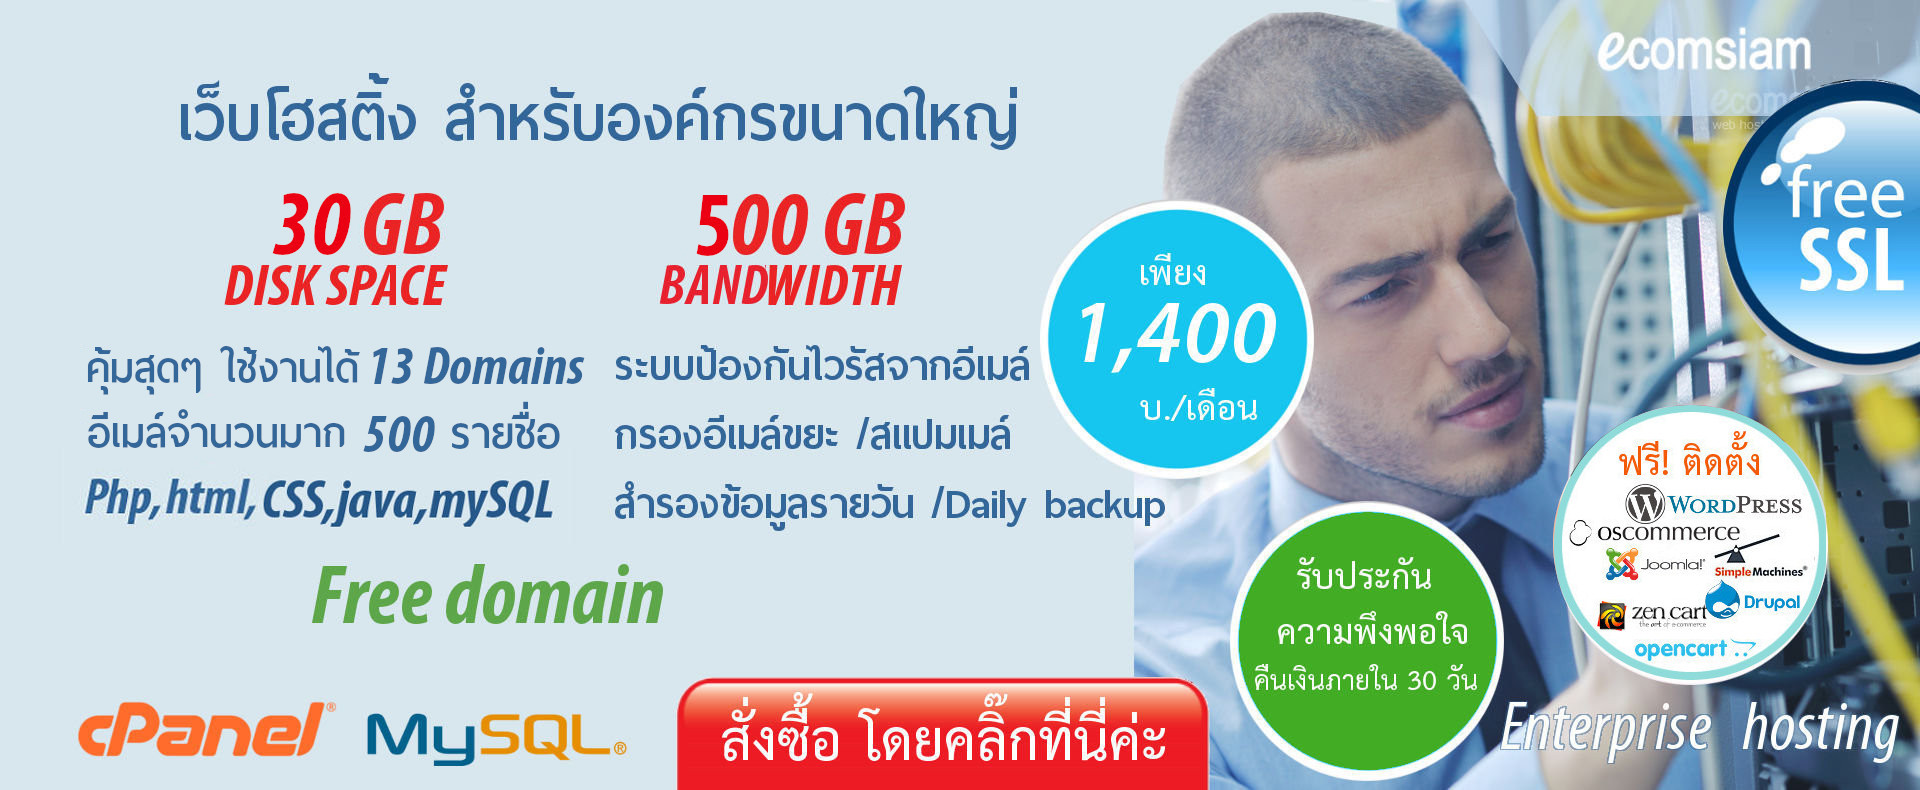 enterprise hosting plan thai เว็บโฮสติ้งไทย สำหรับองค์กรขนาดใหญ่  ฟรี SSL เว็บโฮสติ้งไทย ฟรีโดเมน สำหรับองค์กร ที่ต้องการใช้งานเว็บไซต์และฐานข้อมูล MySql ฟรี SSL เริ่มต้นเพียง 1,400 บาทต่อเดือน